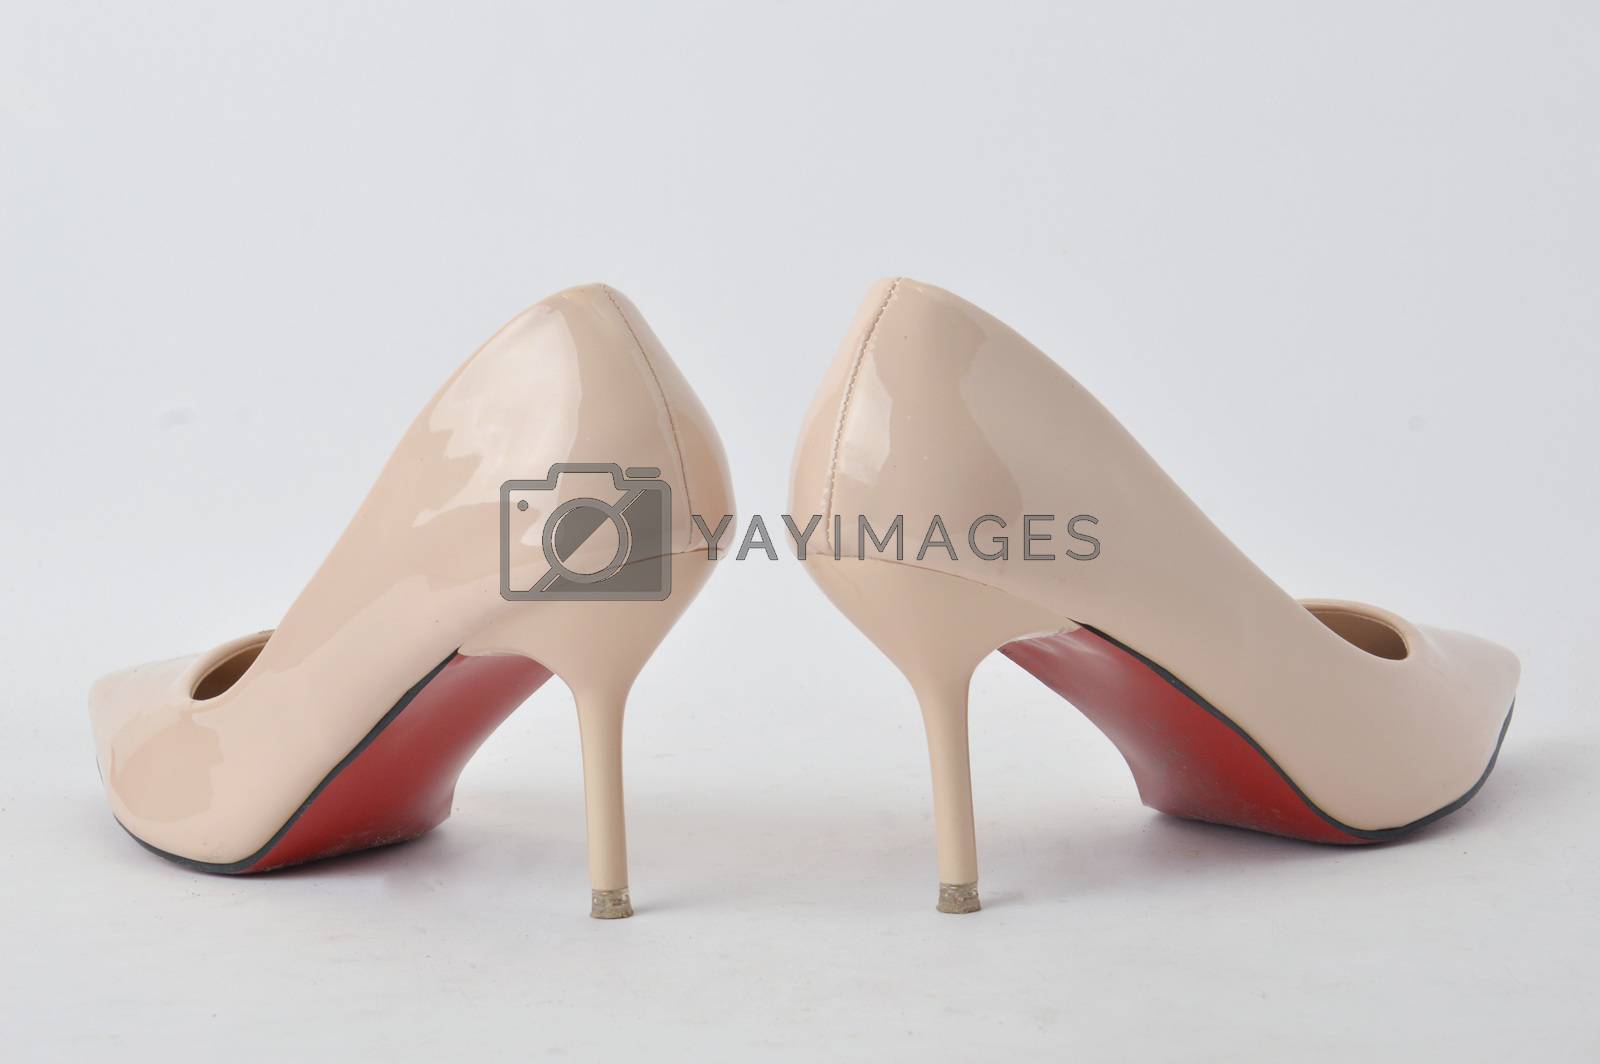 Royalty free image of high heel shoes by antonihalim